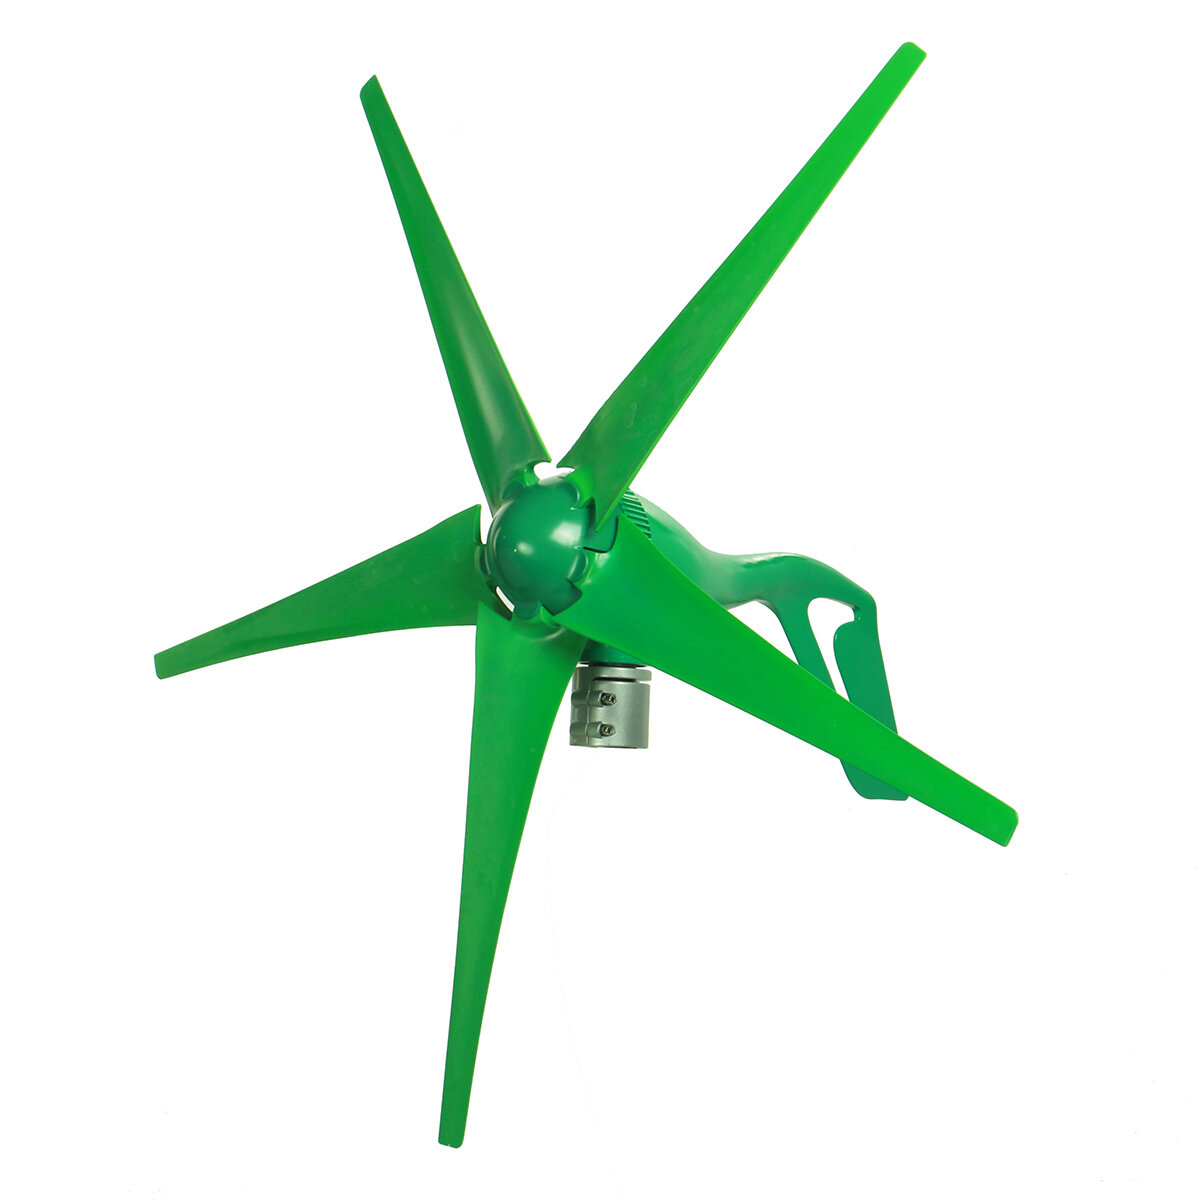 

12V/24V 5 Blades 1800W Peak Green Horizontal Power Wind Turbine Generator With Charge Controller